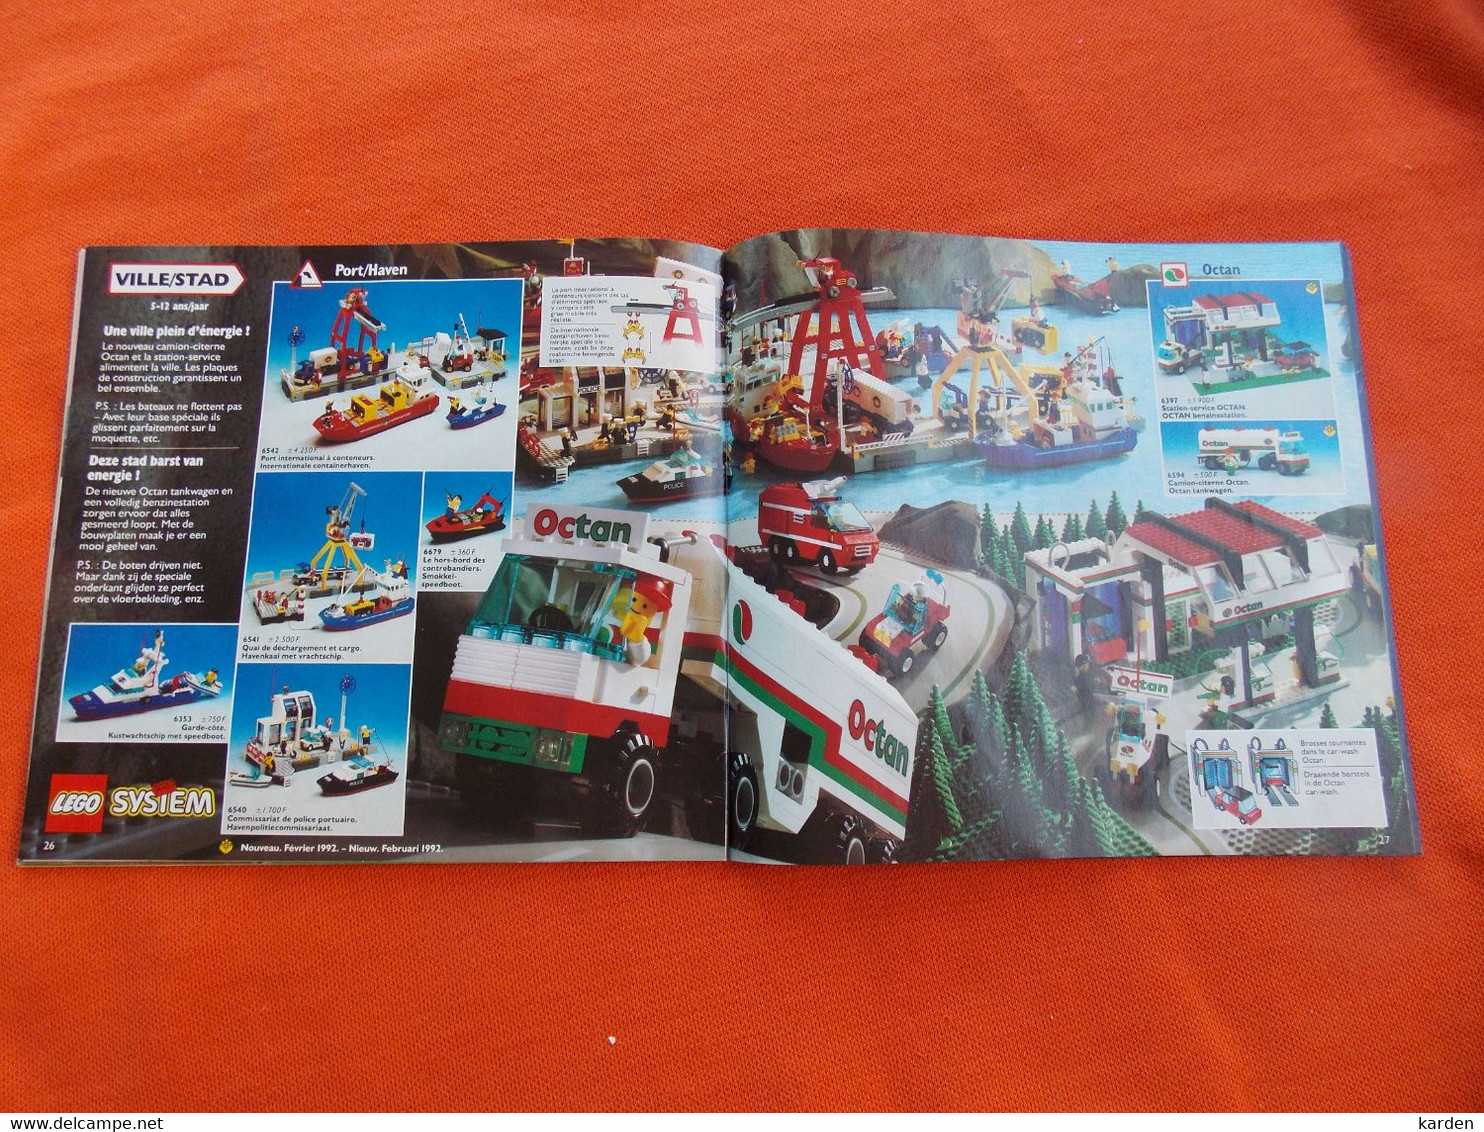 Lego catalogus1992